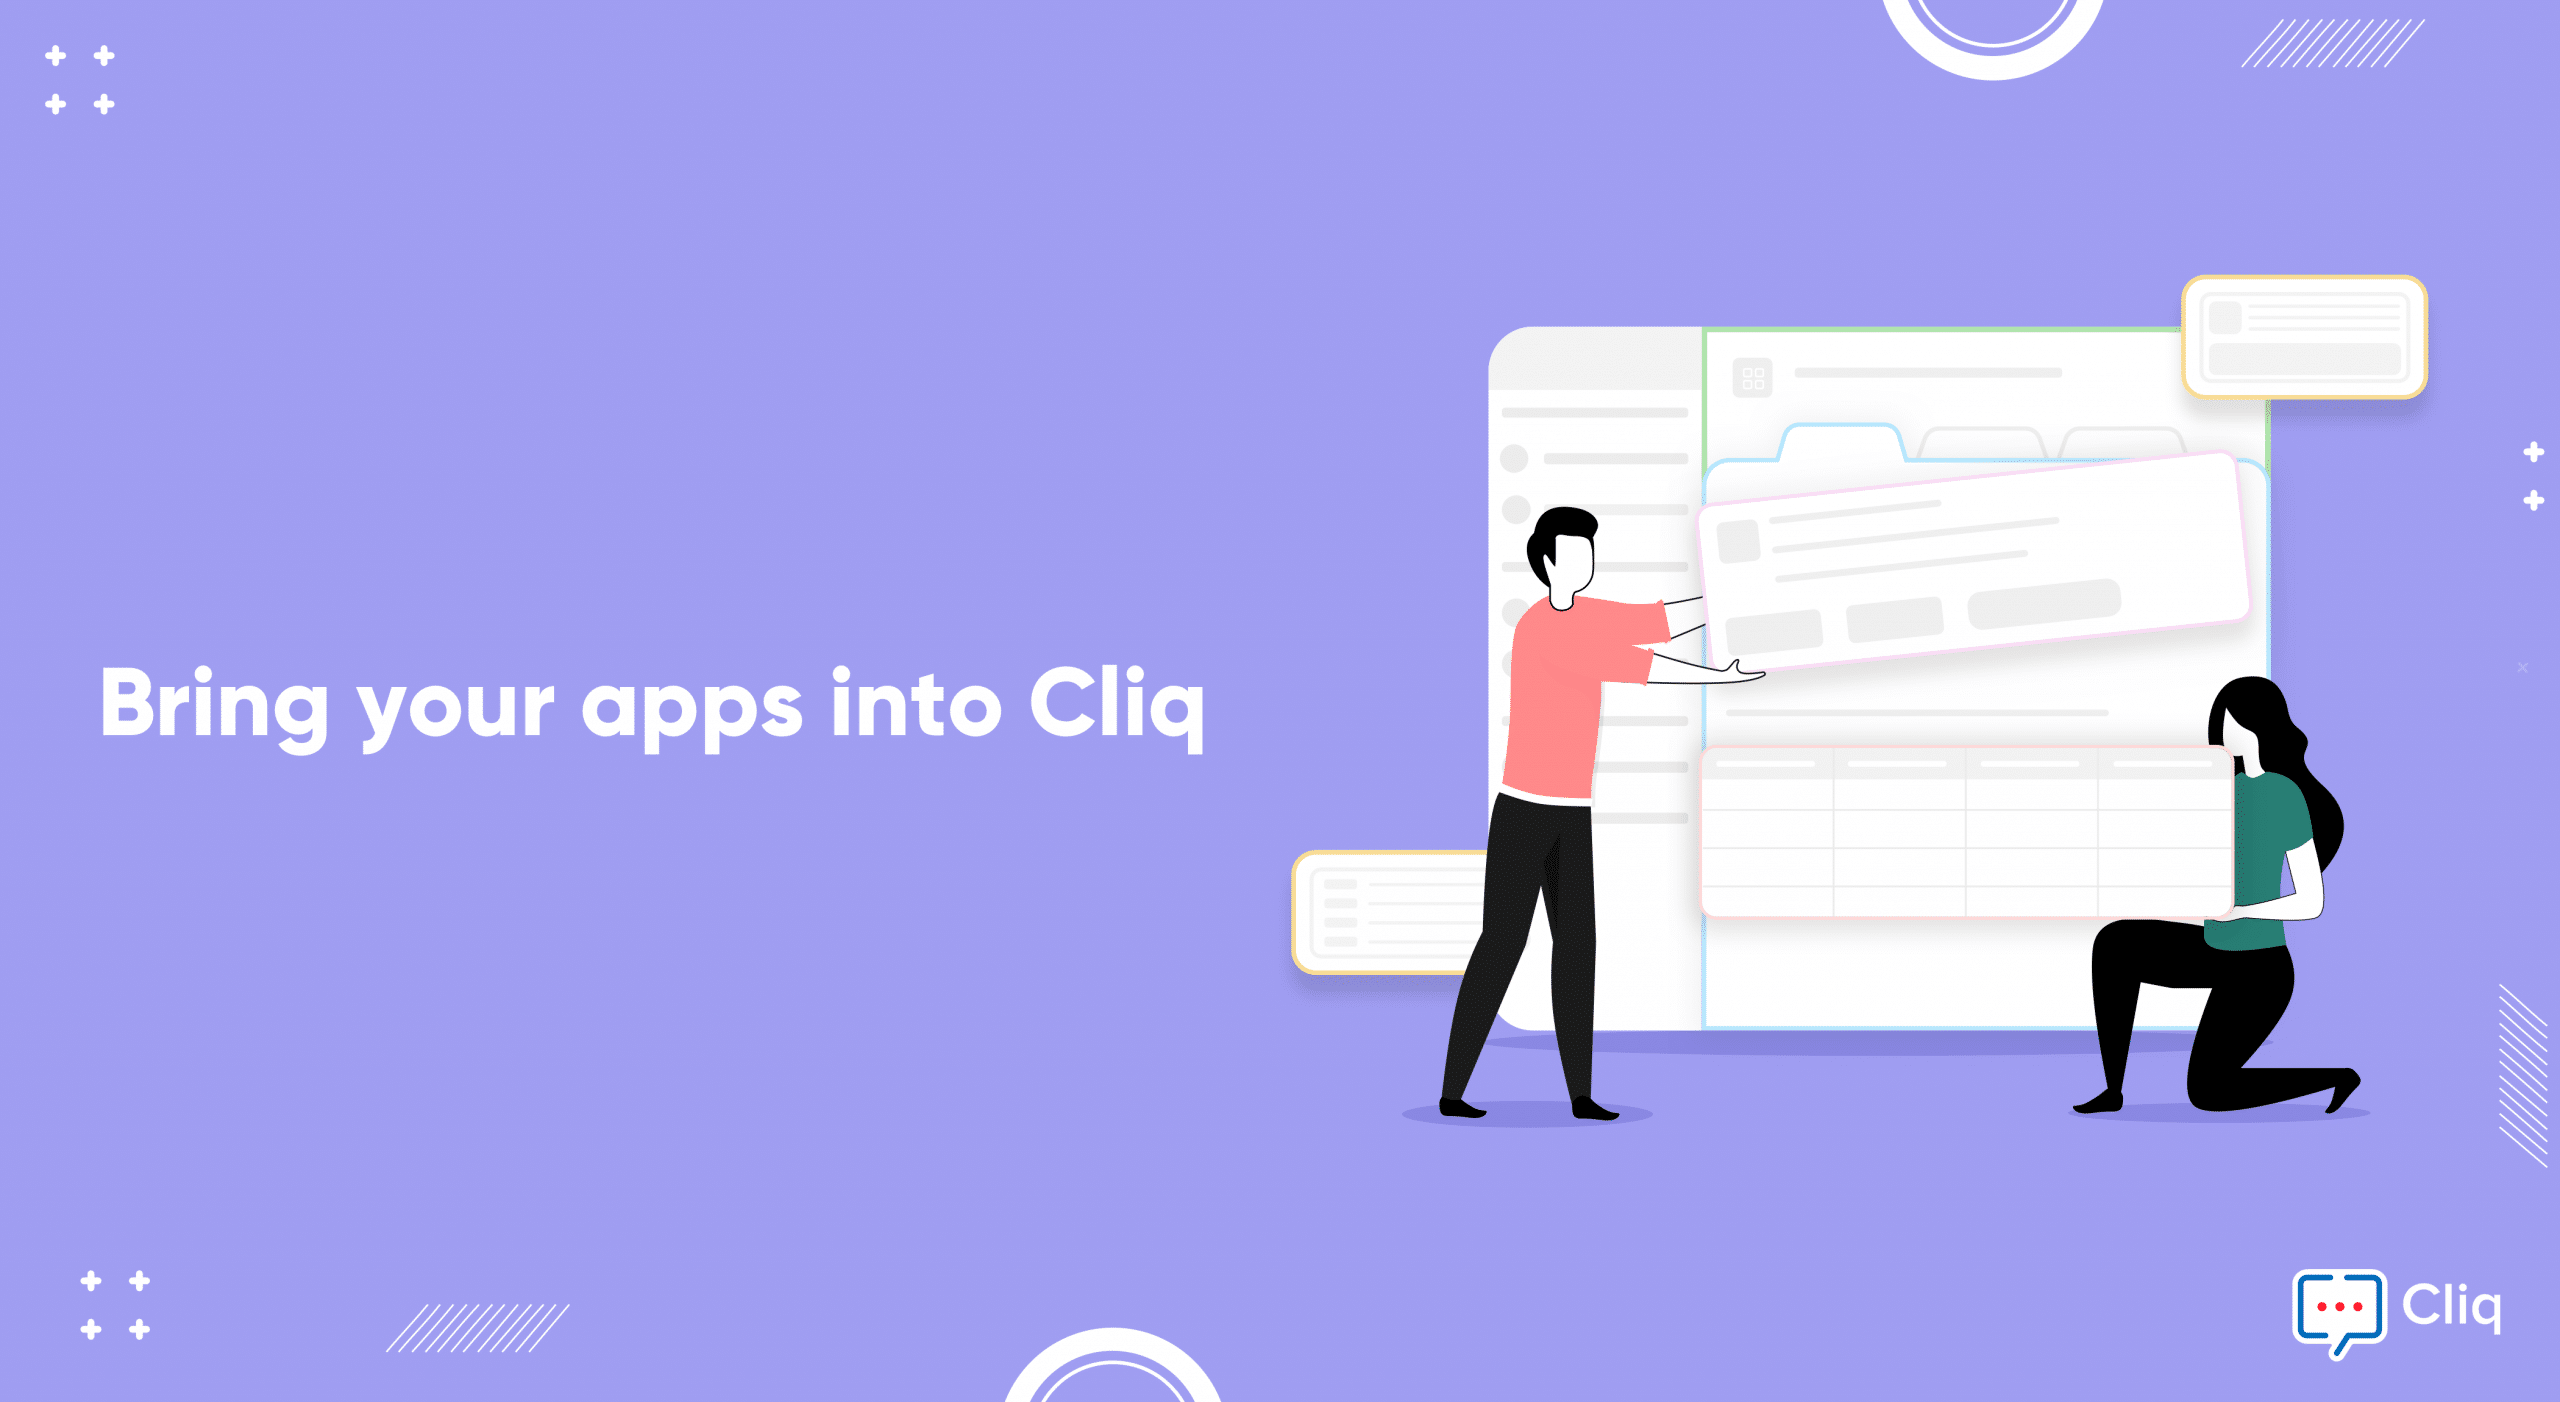 Bring your apps into Cliq